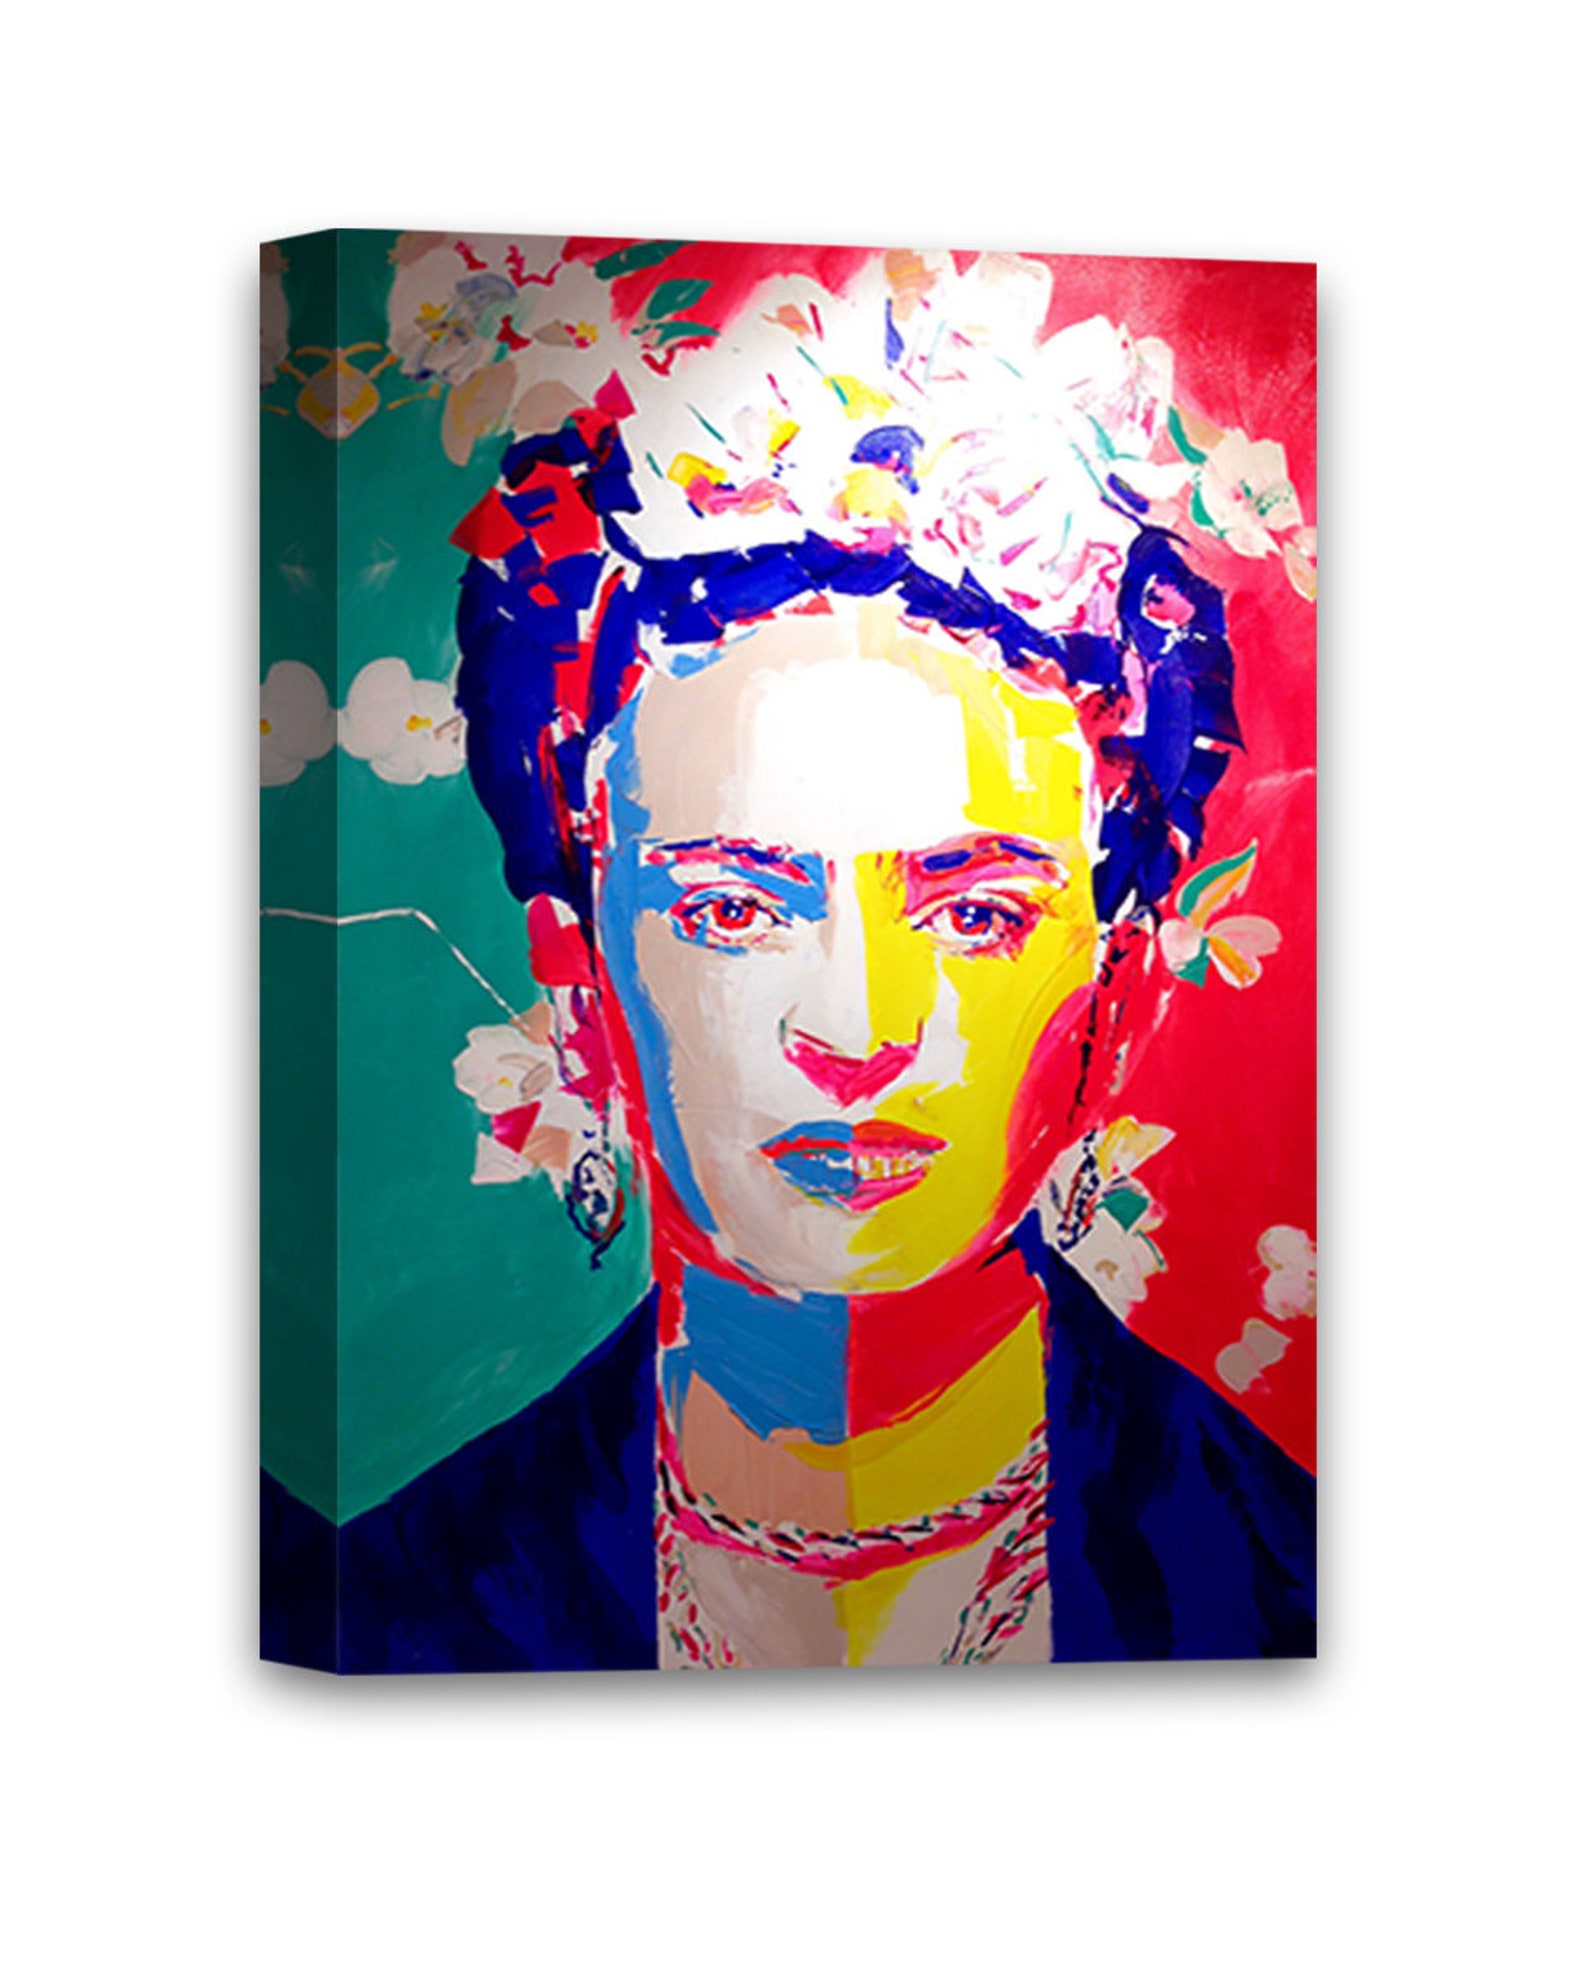 Frida Kahlo Canvas Wall Art Floral Pop Artwork Home Decor | Etsy